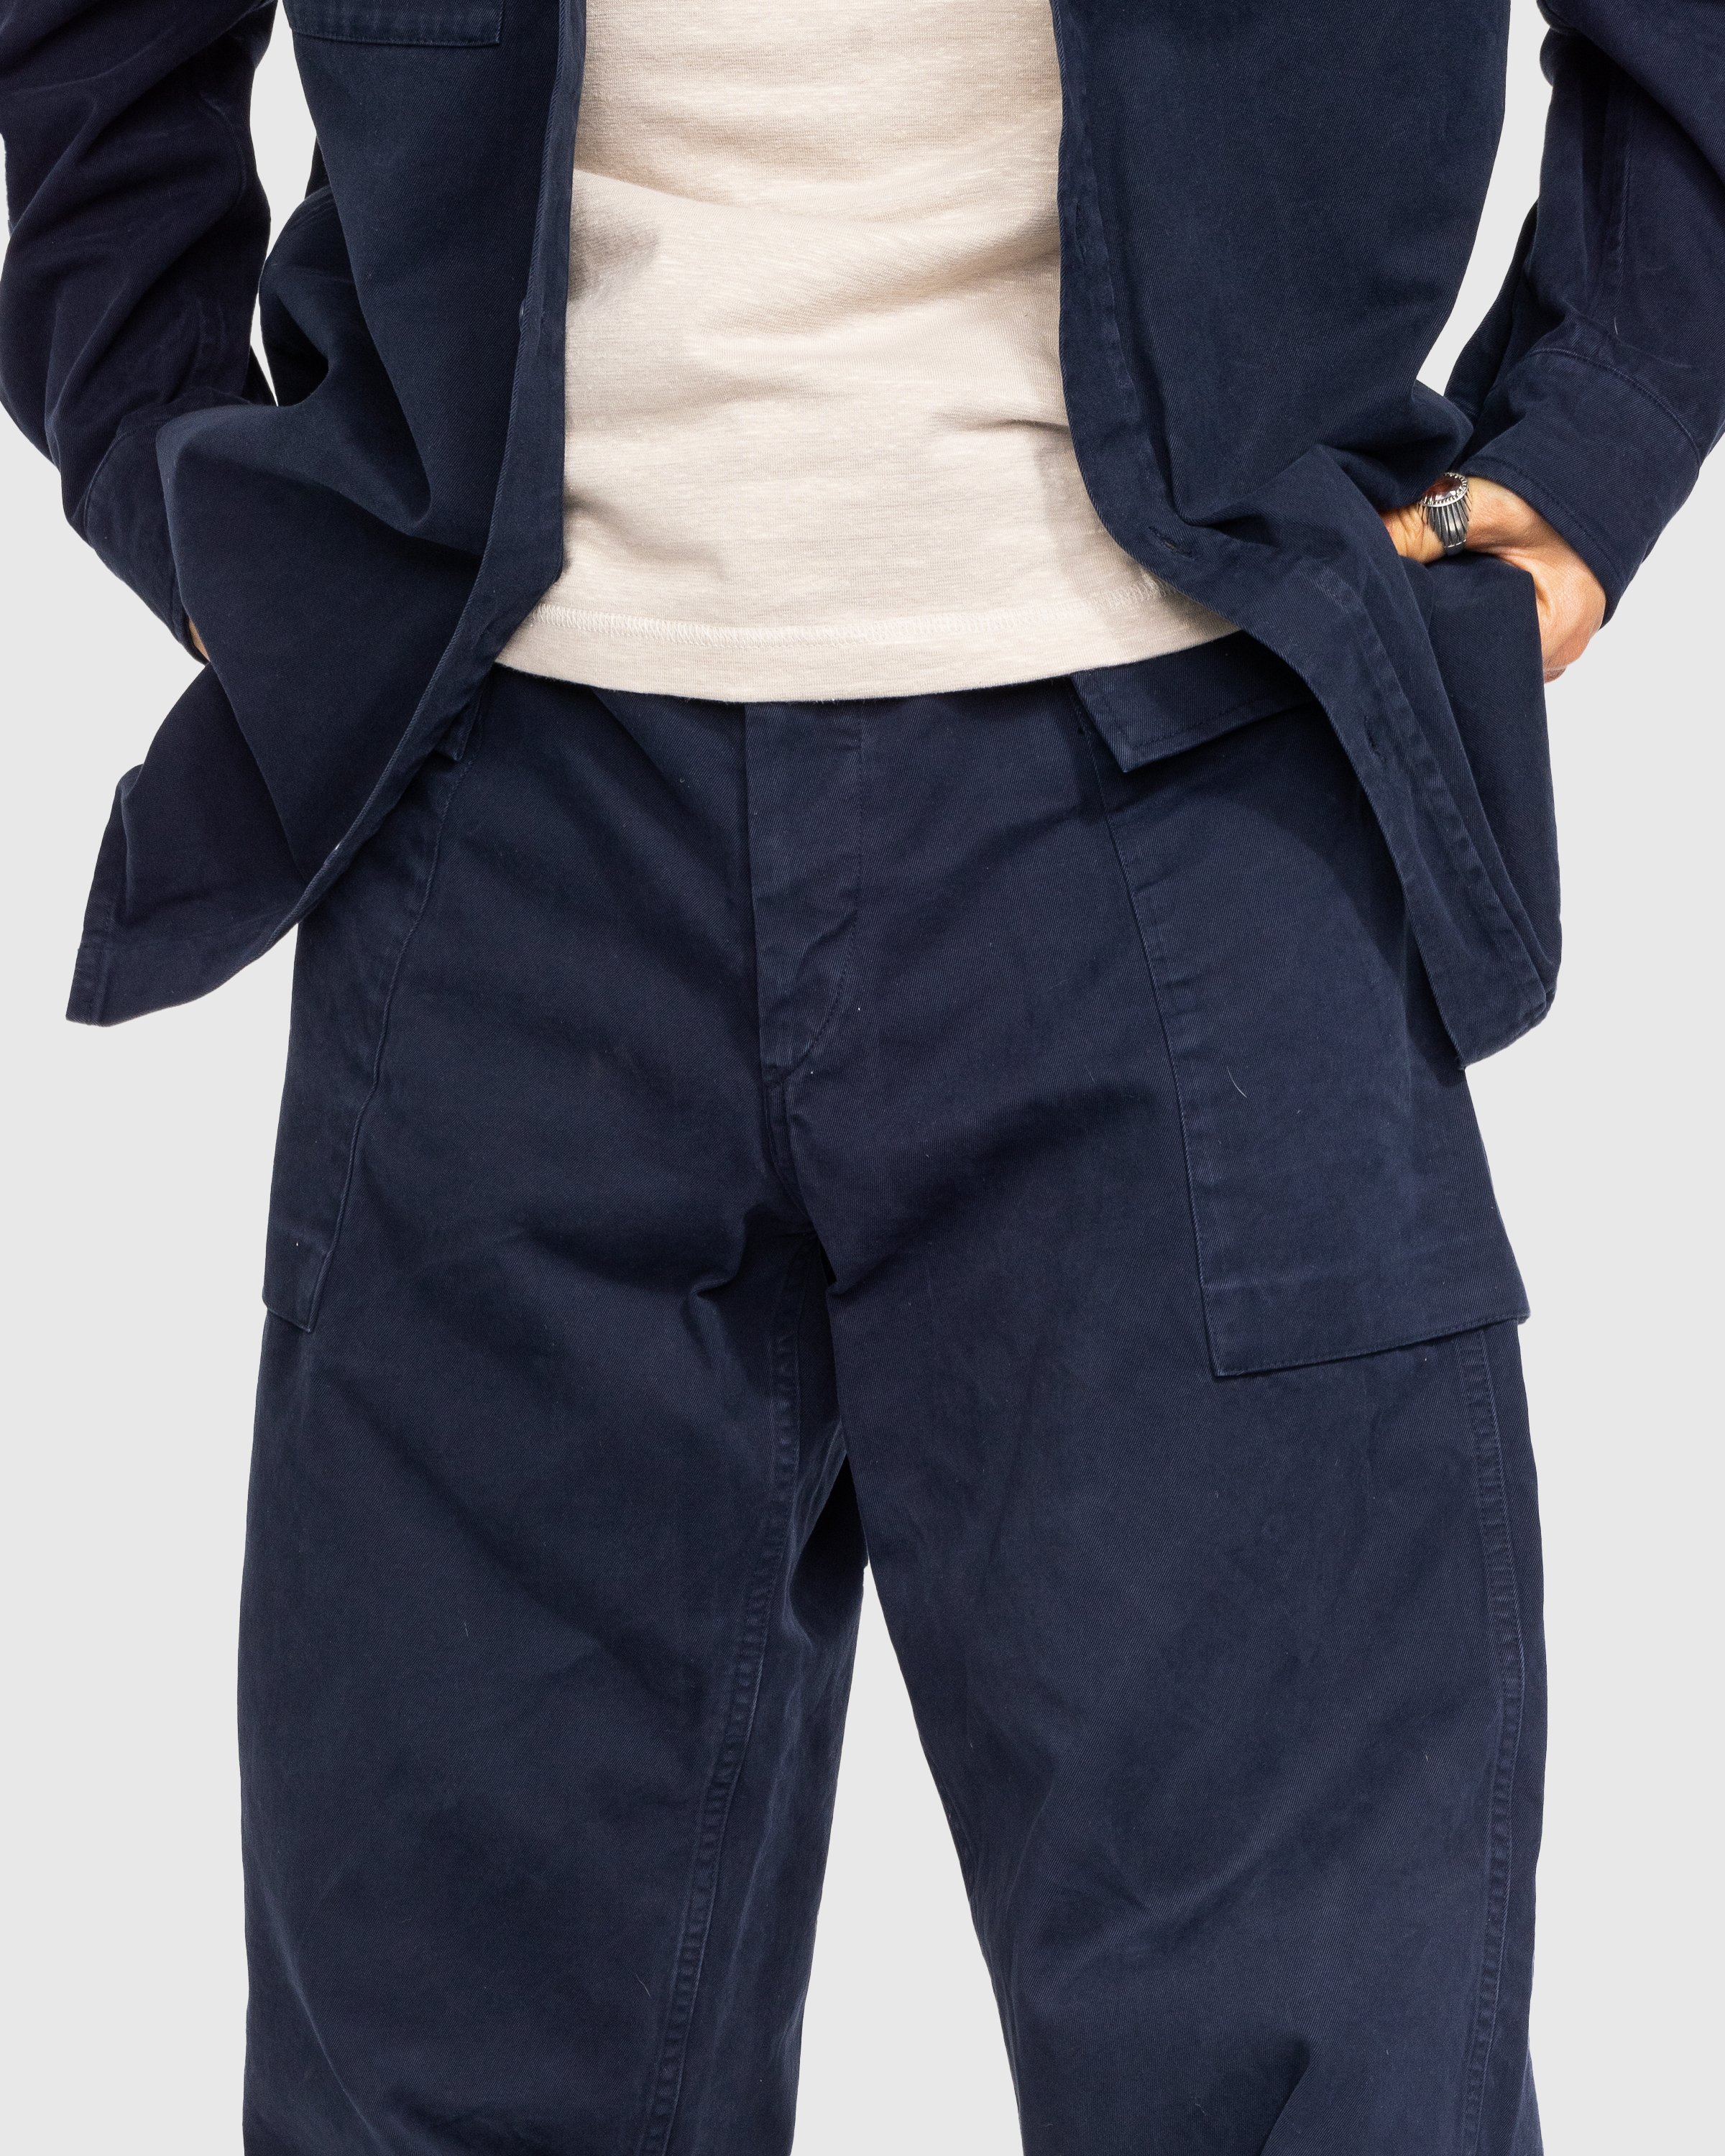 A.P.C. x Jean Touitou - Booster Fatigue Pants Navy - Clothing - Blue - Image 4